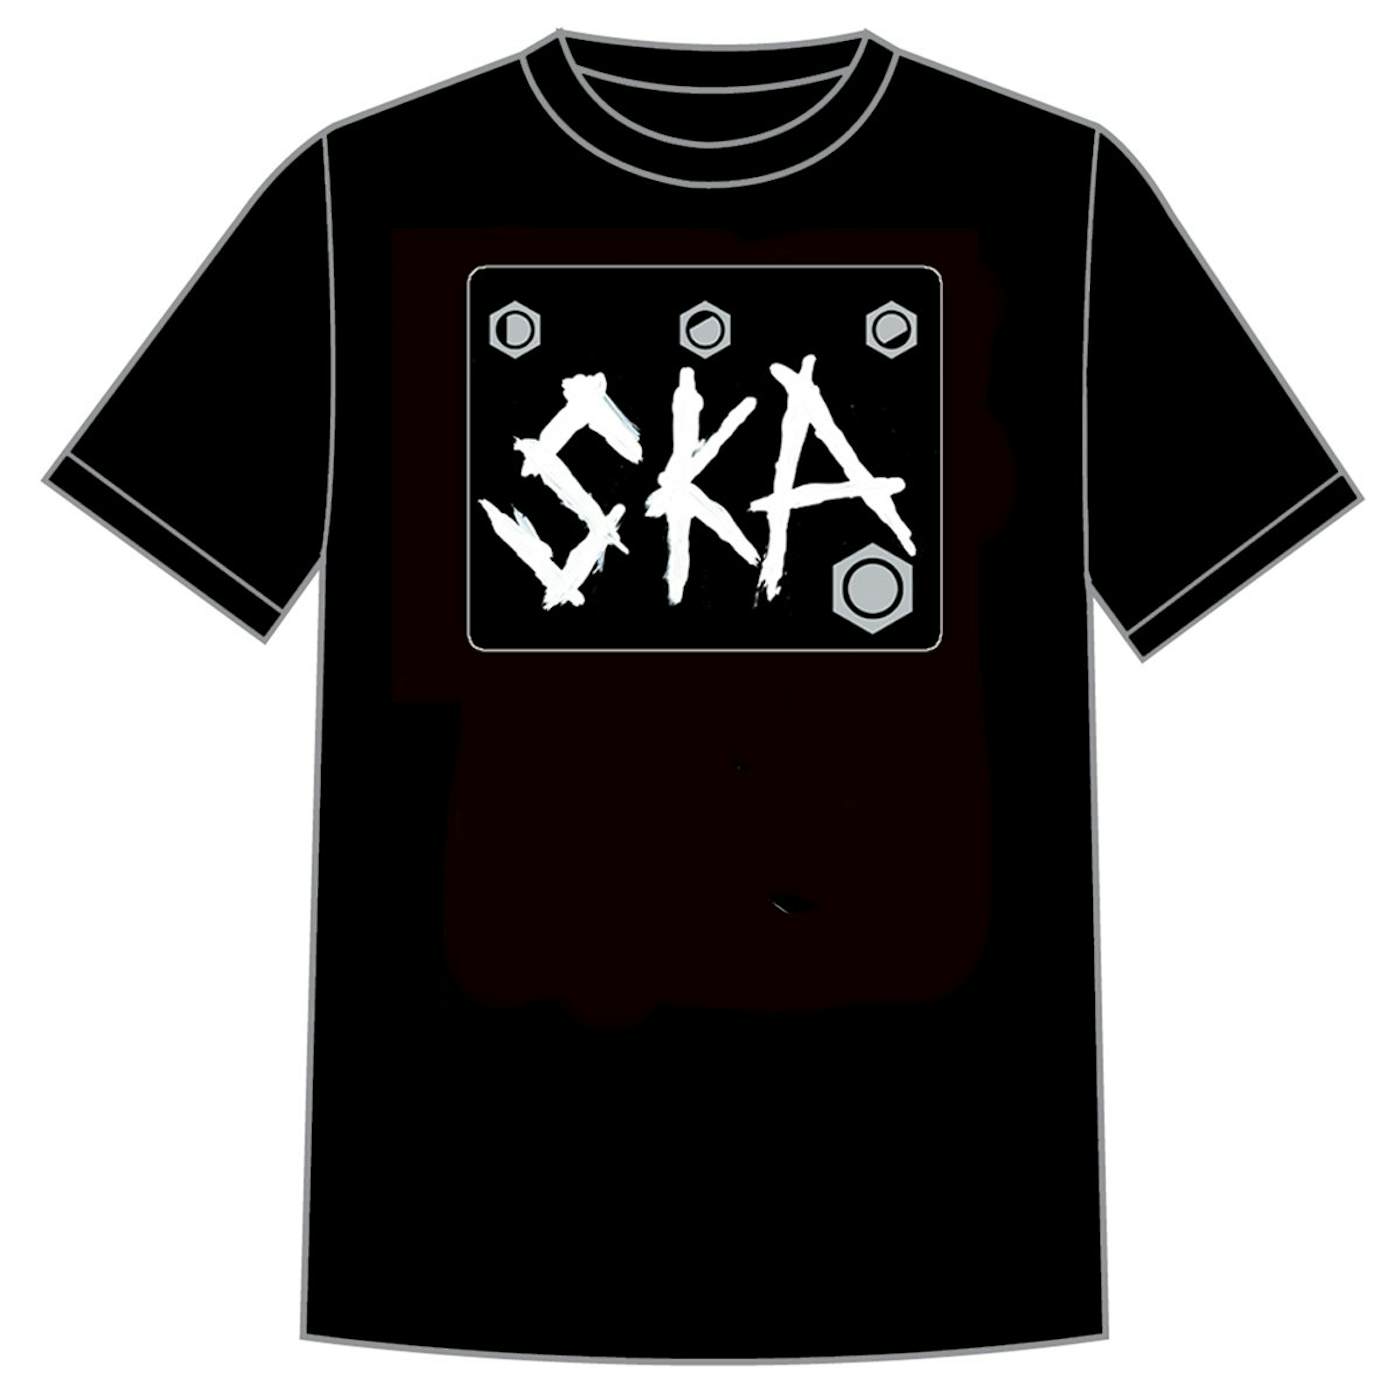 Road Dog Merch "Ska" Pedal shirt